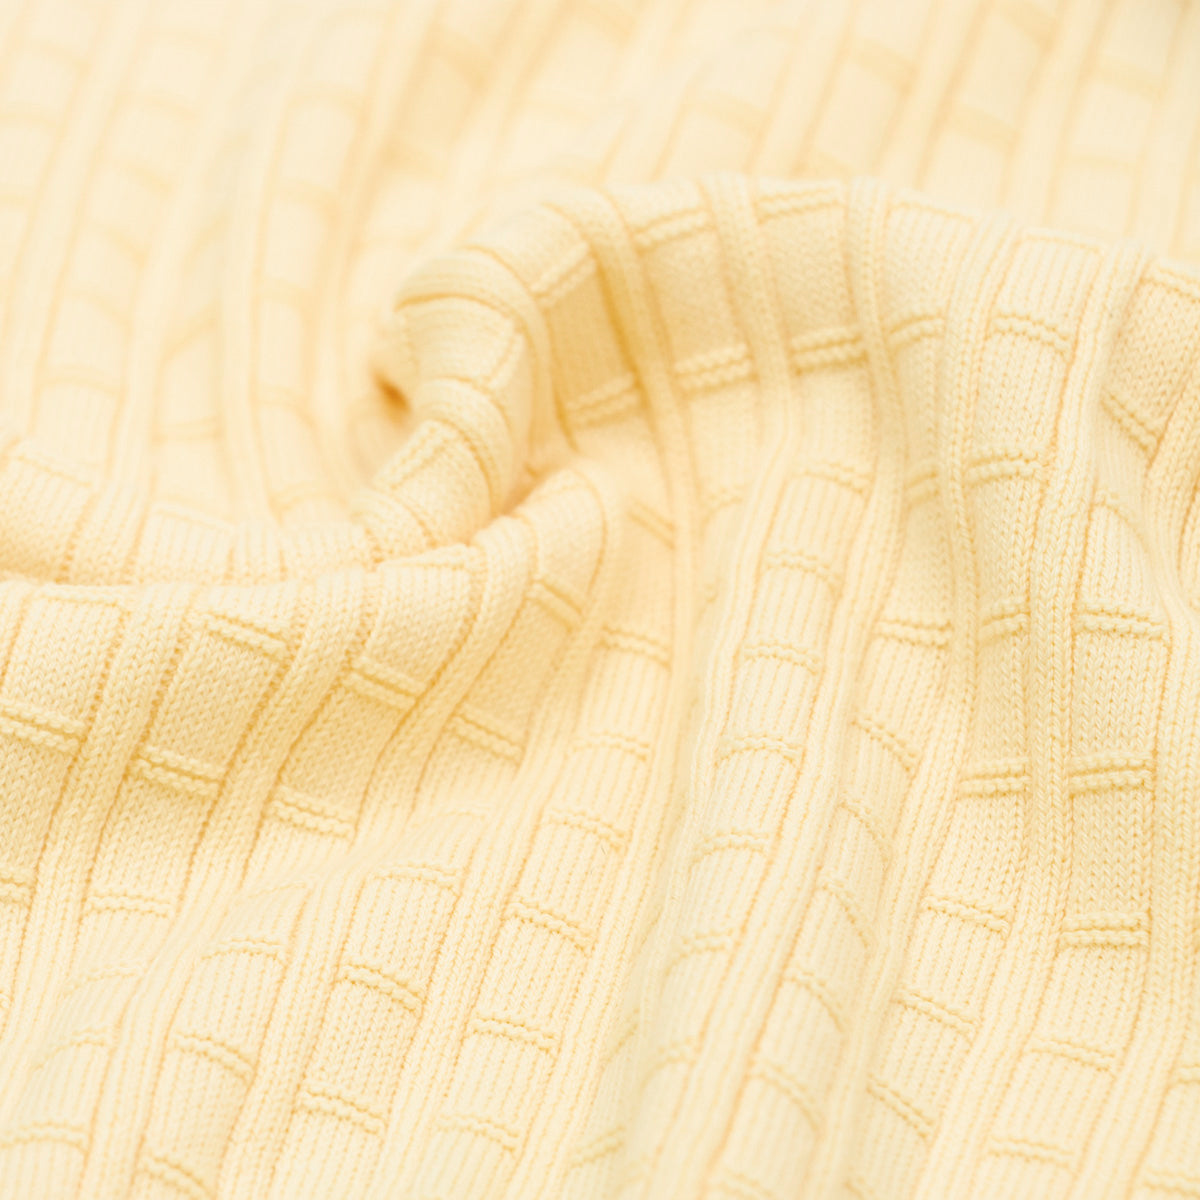 Yellow 100% Cotton Knit Short Sleeve Polo Shirt  Robert Old   